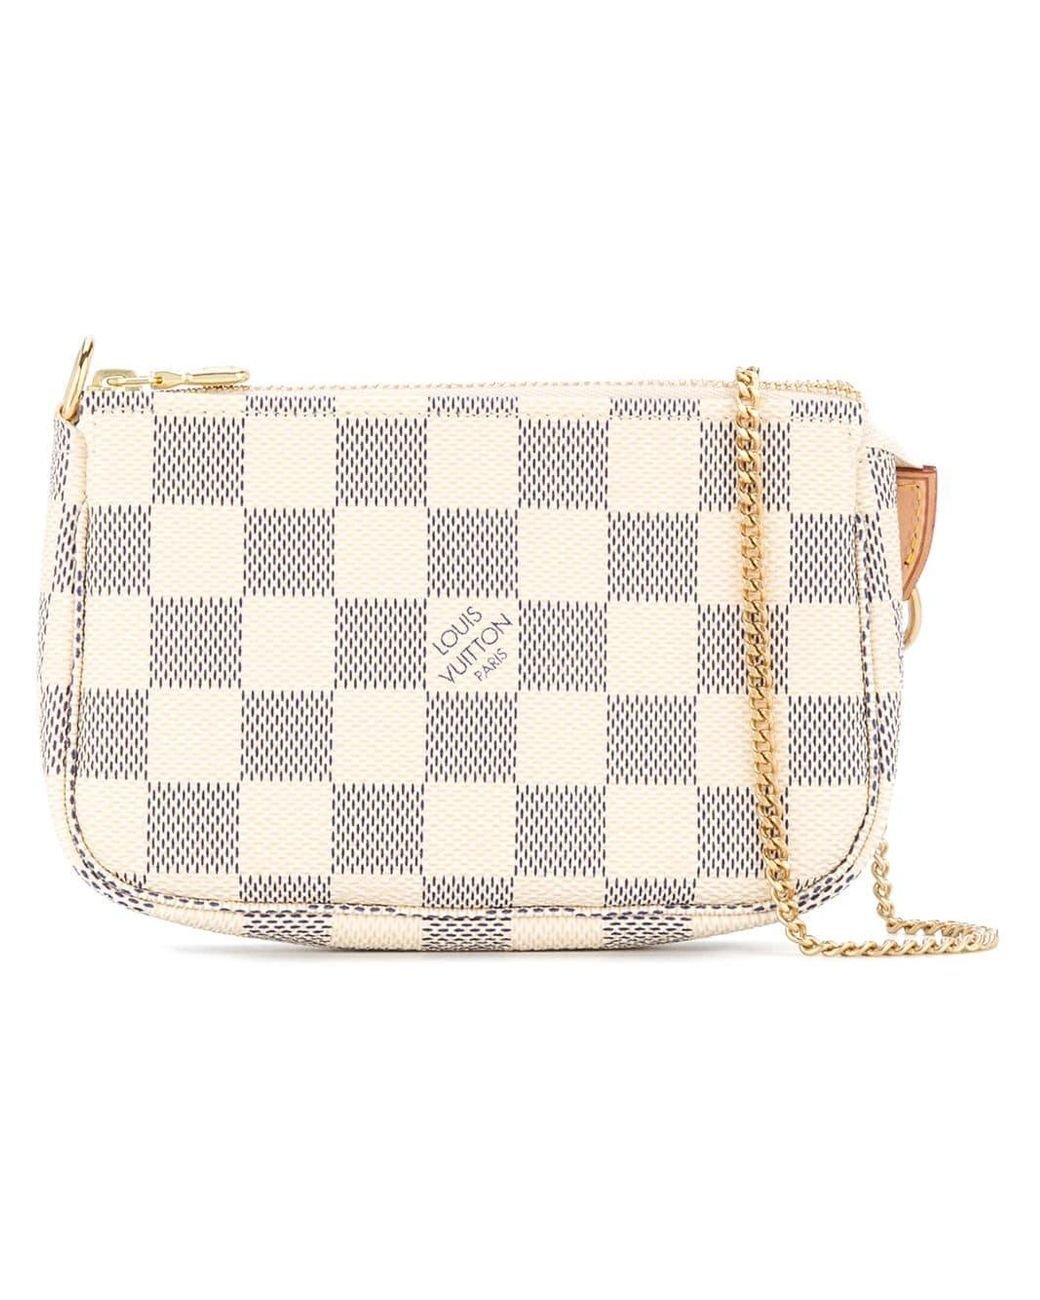 Louis Vuitton Holiday mini pochette accessories handbag, Japan